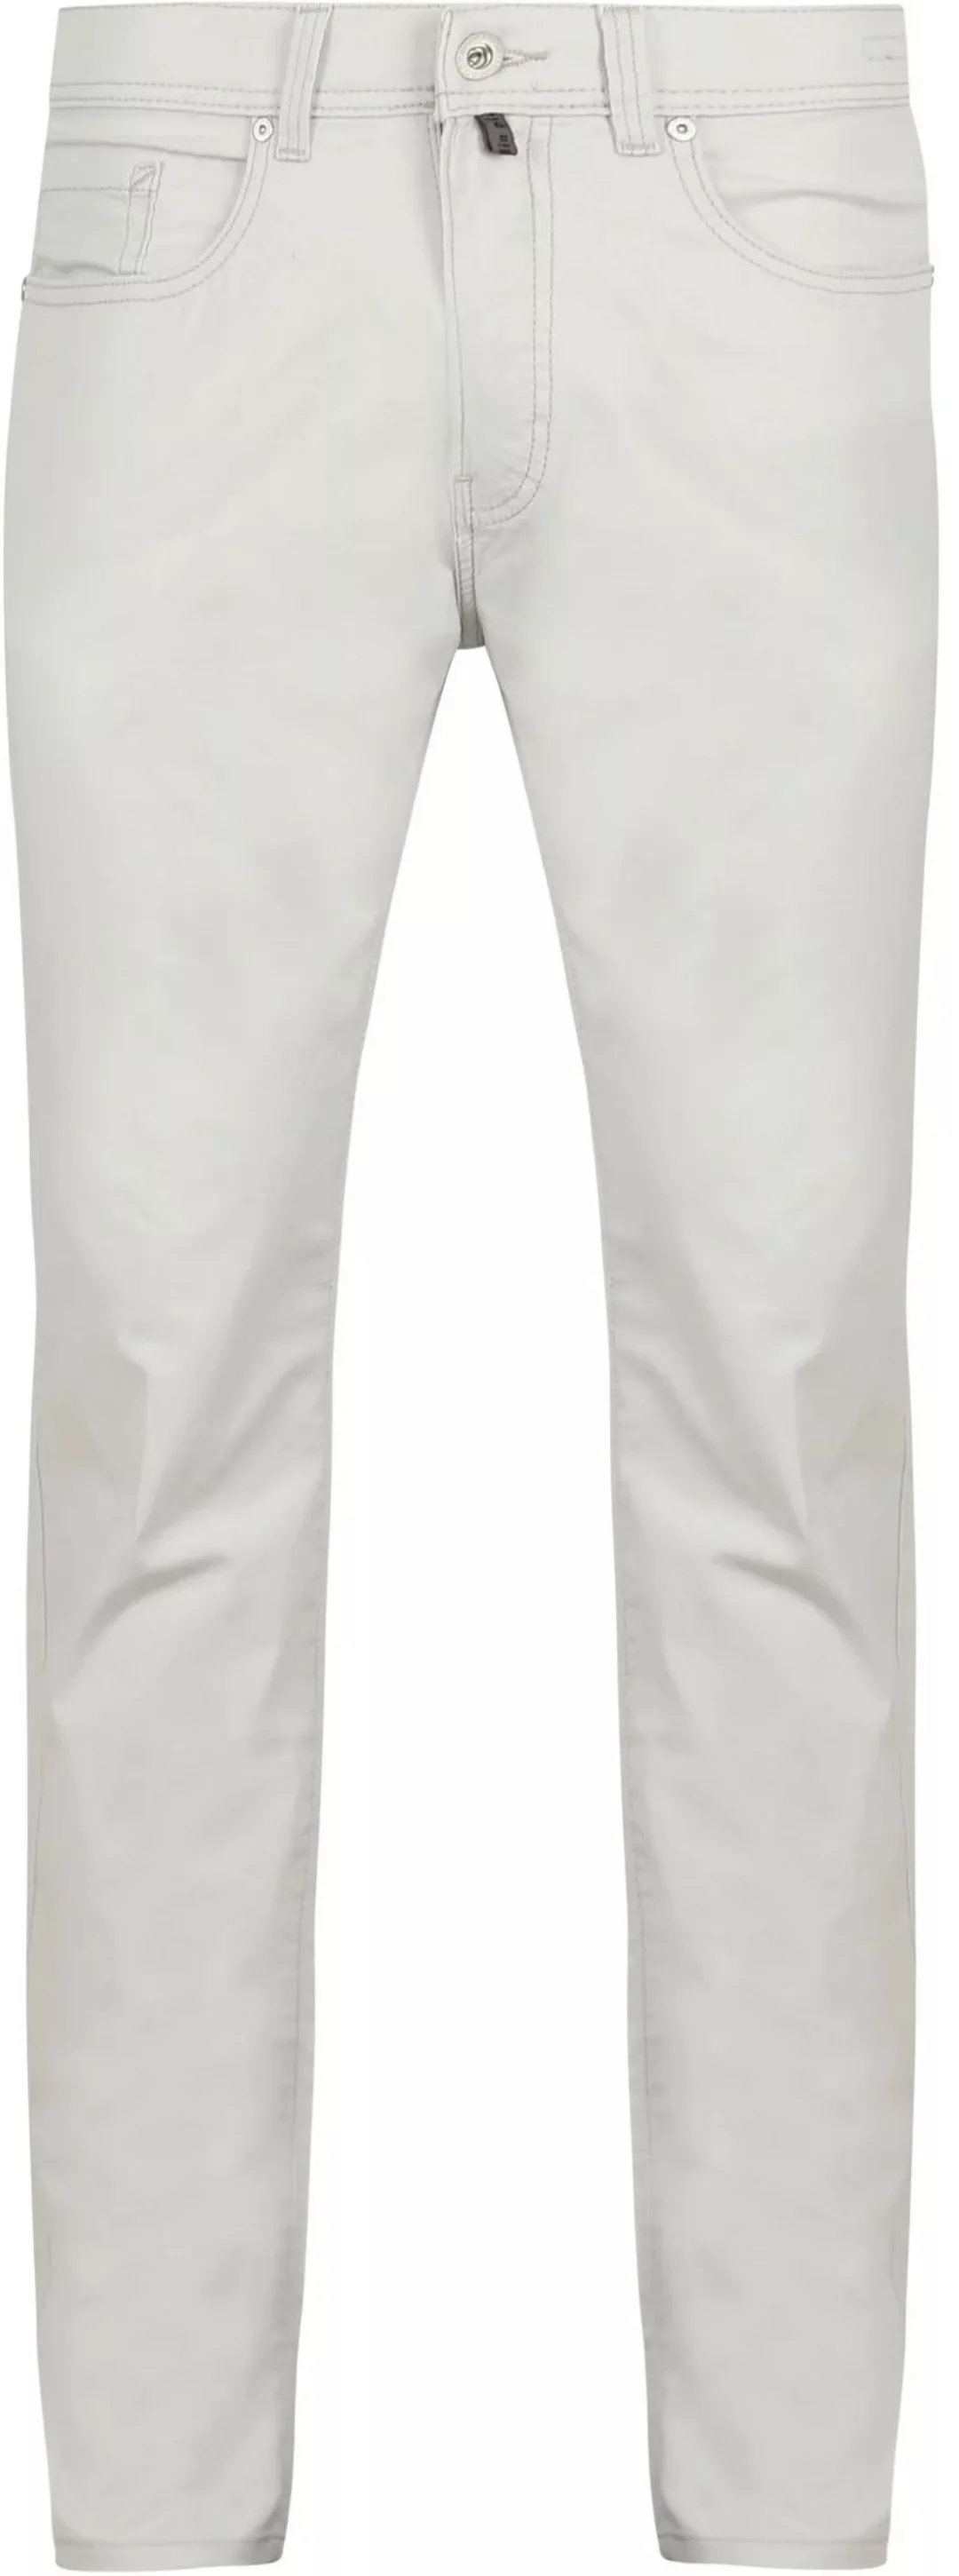 Pierre Cardin Trousers Lyon Tapered Hellgrau - Größe W 33 - L 30 günstig online kaufen